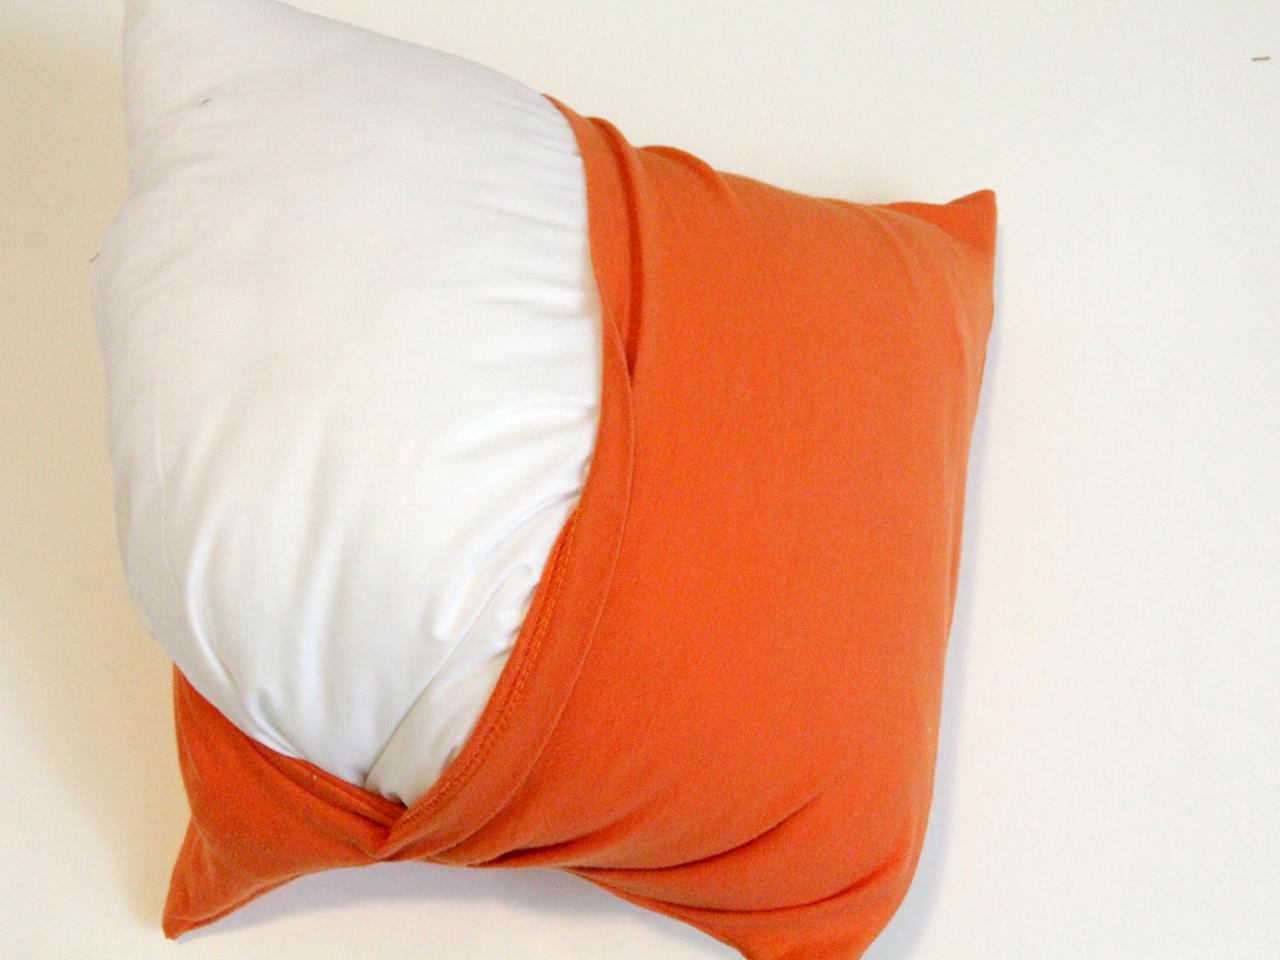 tee shirt pillows